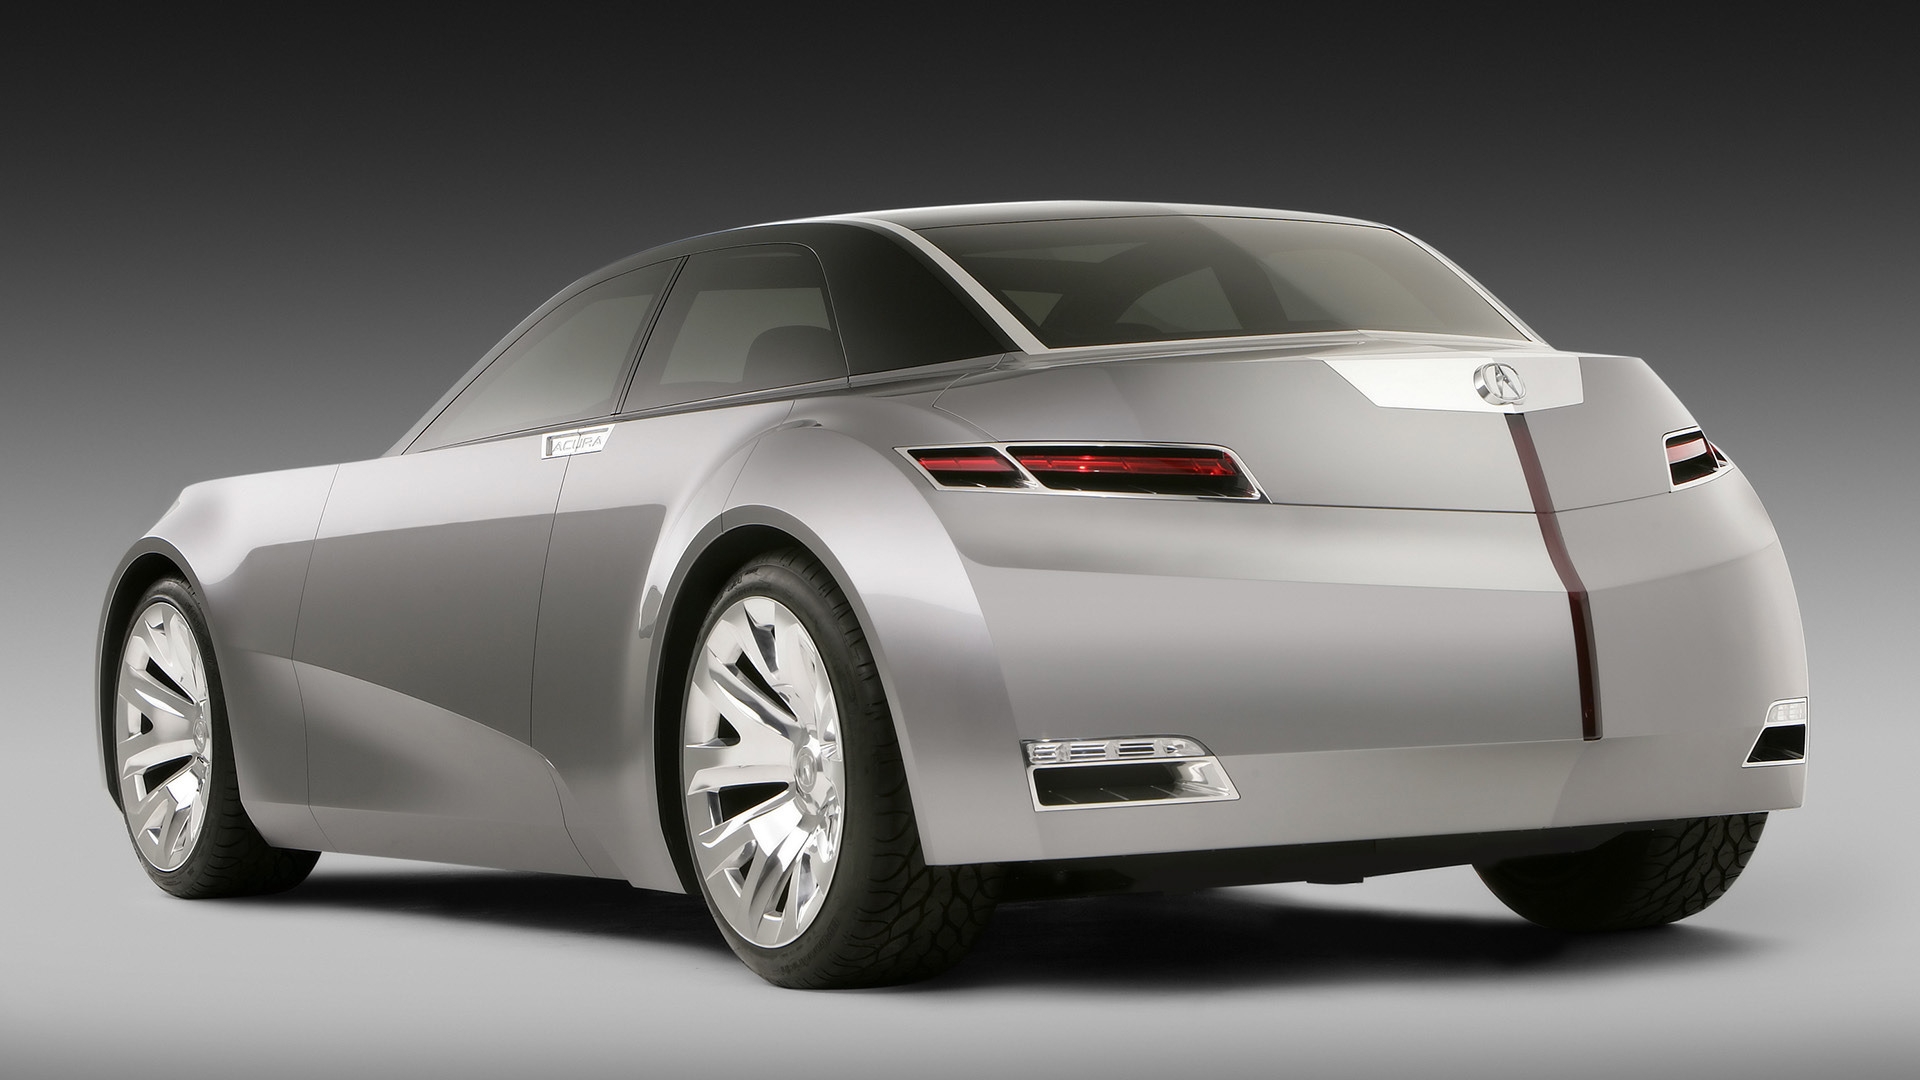 Acura Sedan Concept Rear for 1920 x 1080 HDTV 1080p resolution